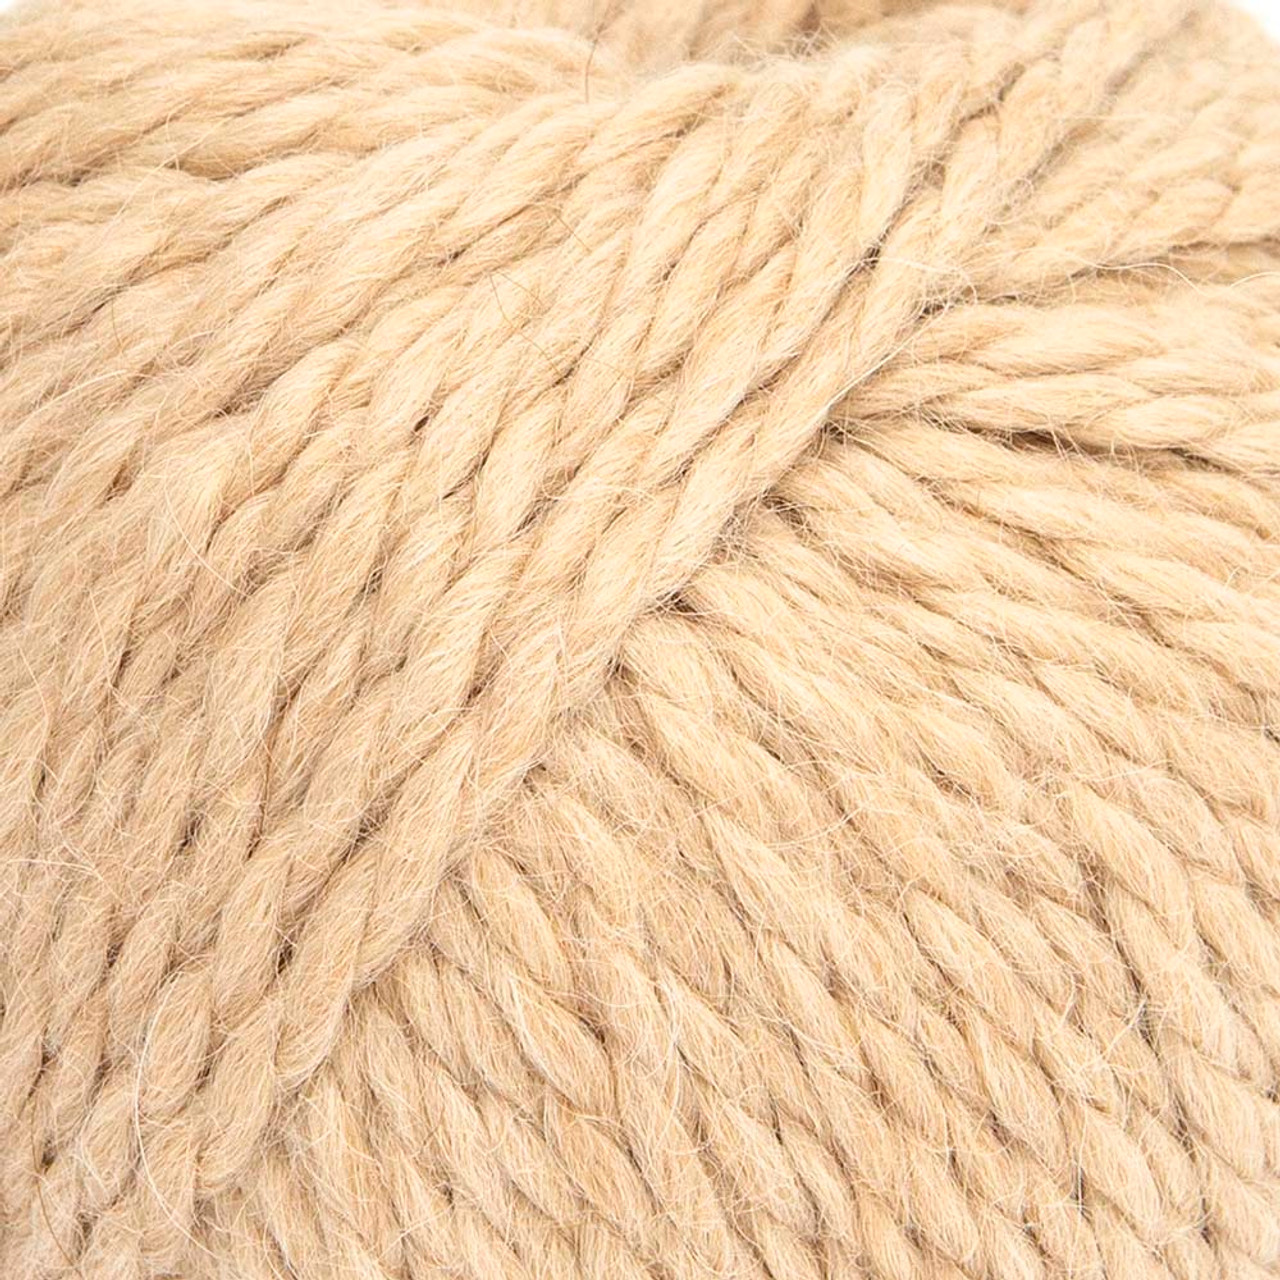 100% Alpaca Yarn Wool Set Of 3 Skeins Bulky Weight - Alpaca Warehouse